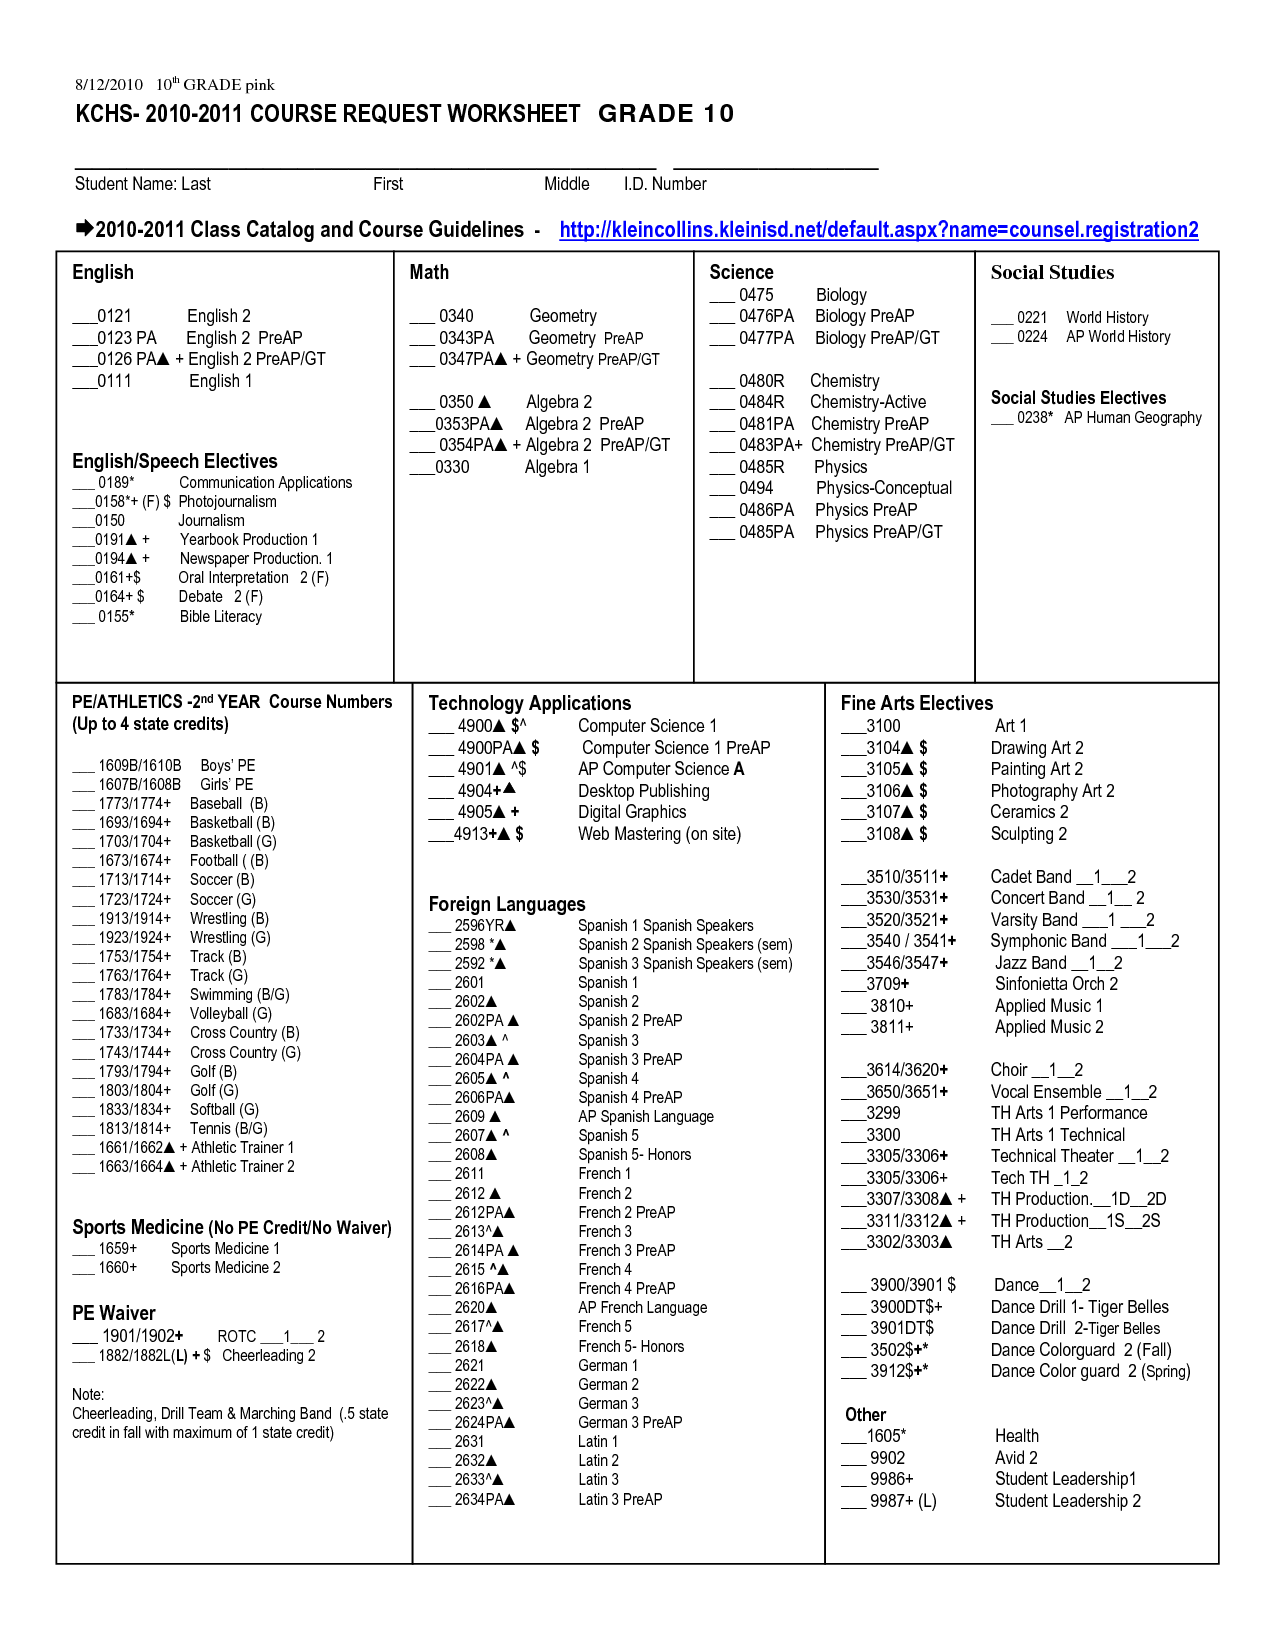 13-best-images-of-10th-grade-worksheets-math-division-worksheets-4th-grade-10th-grade-english